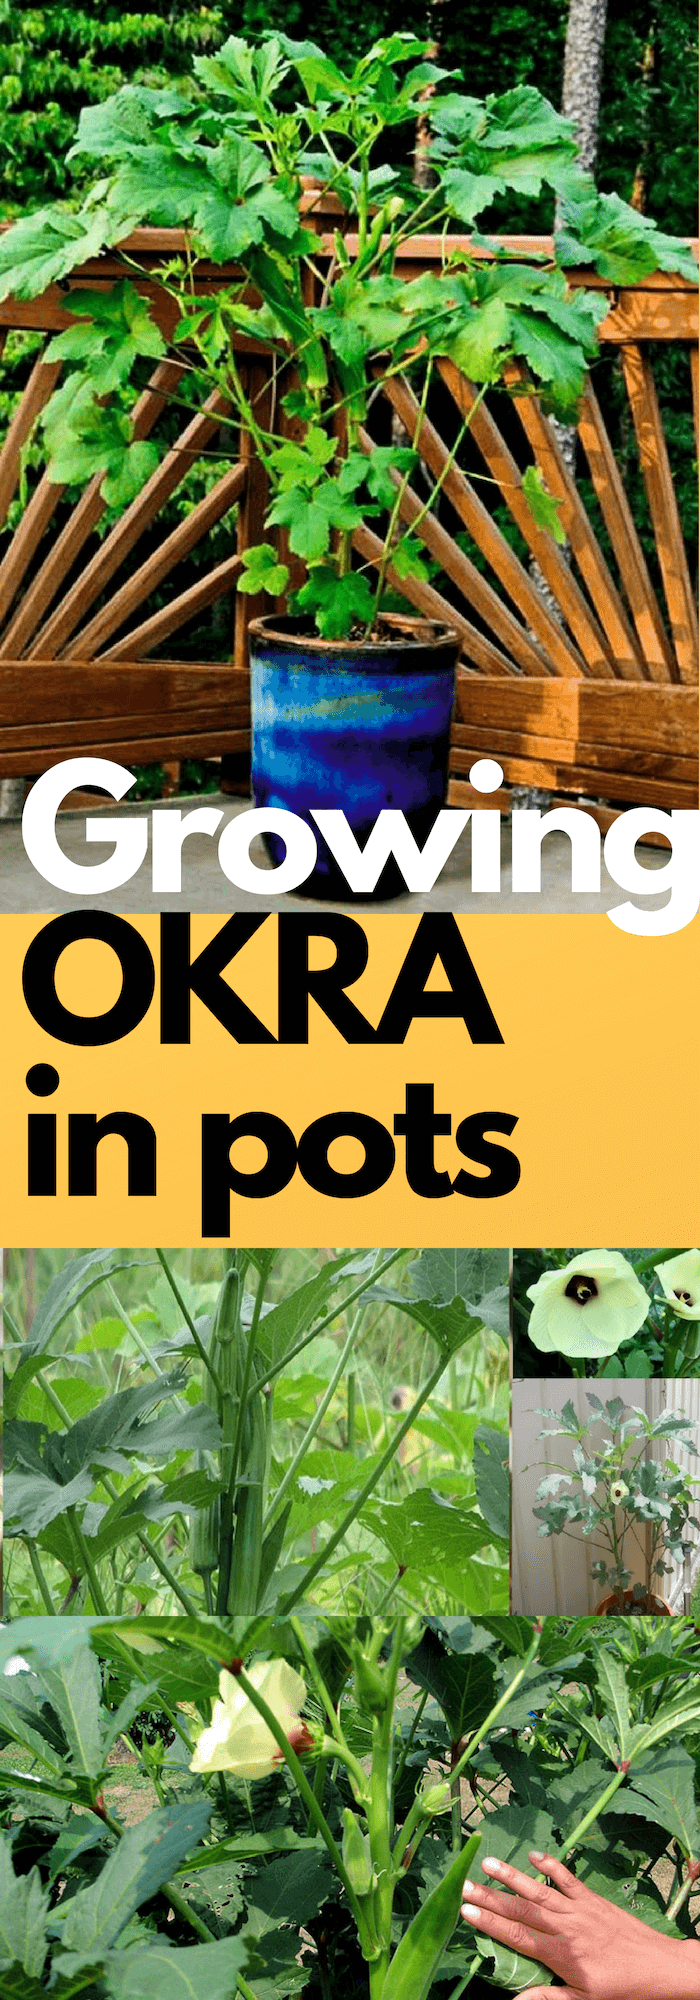 Growing Okra in pots